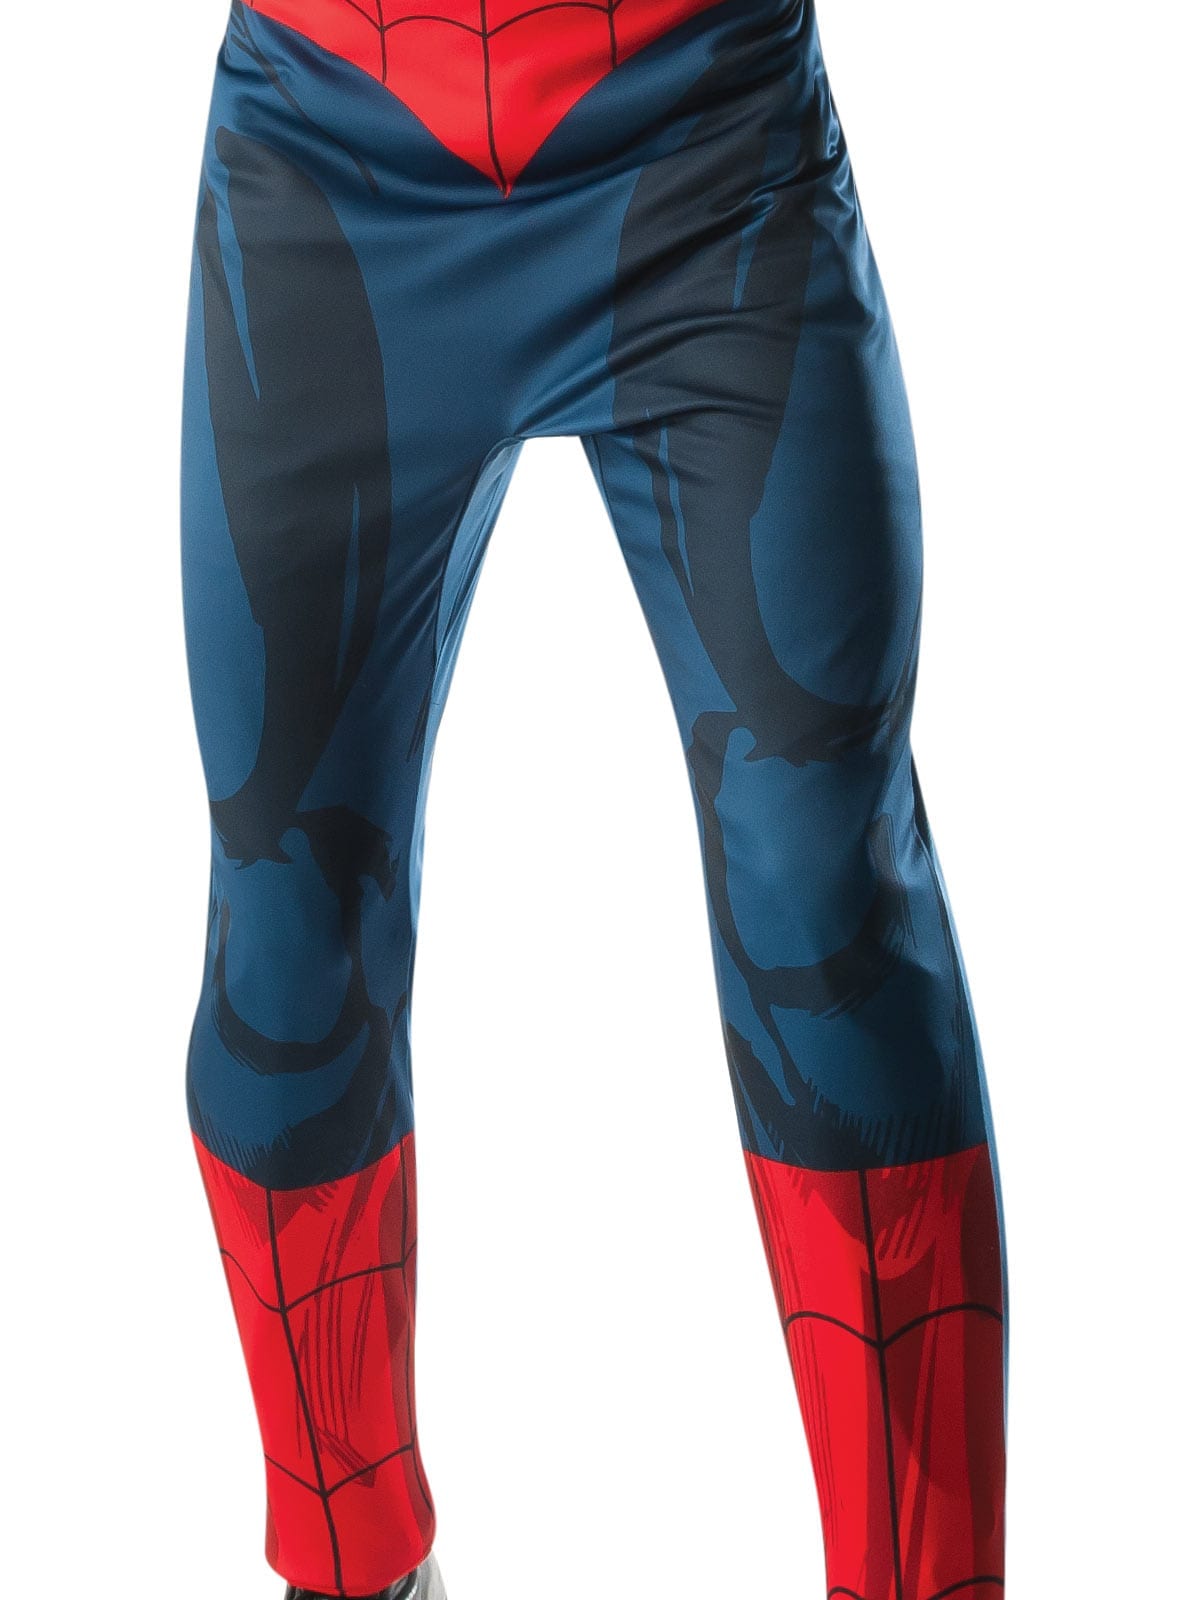 Spider-Man Costume, Adult - The Costumery